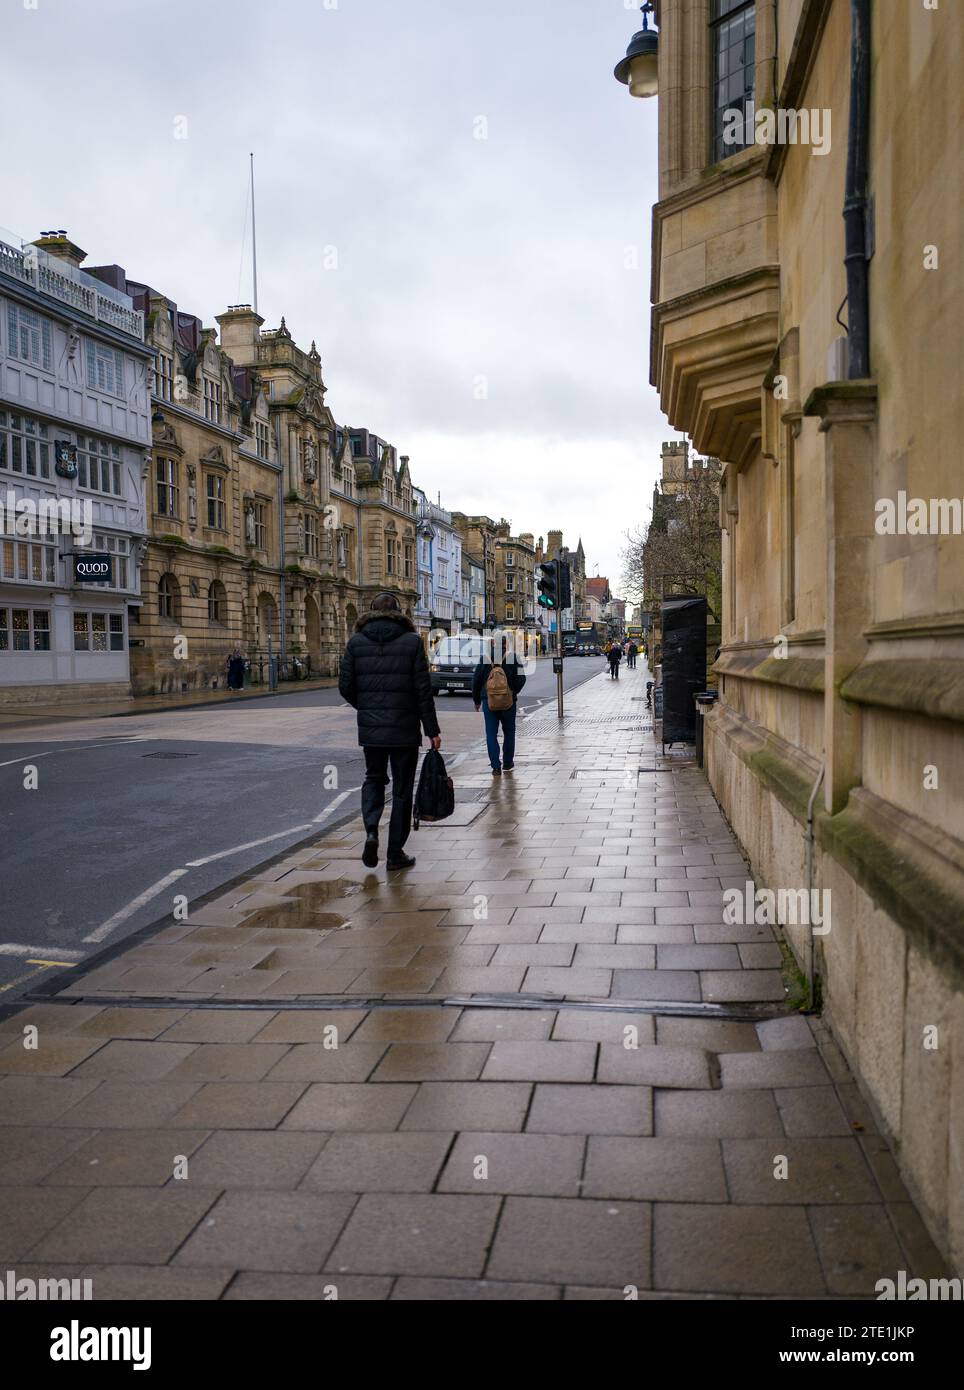 Rainy day on Oxford High Street, England Stock Photo